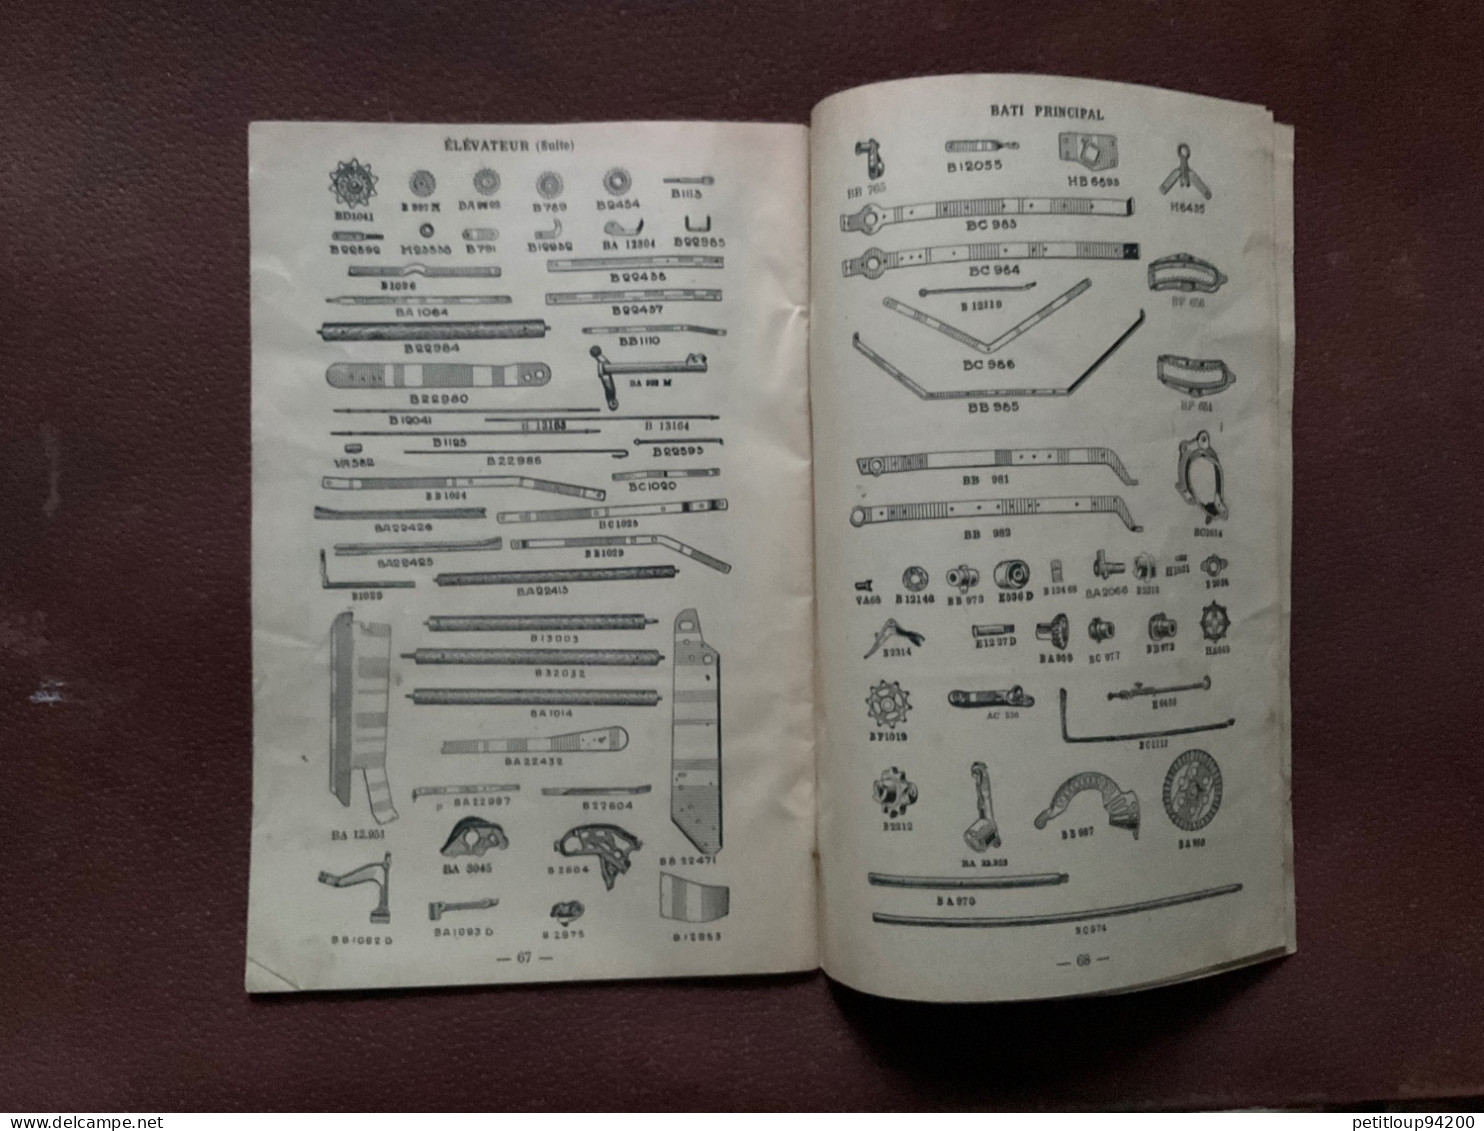 Catalogue DEERING  Moissonneuse Lieuse a Chevaux No 5 INSTRUCTIONS